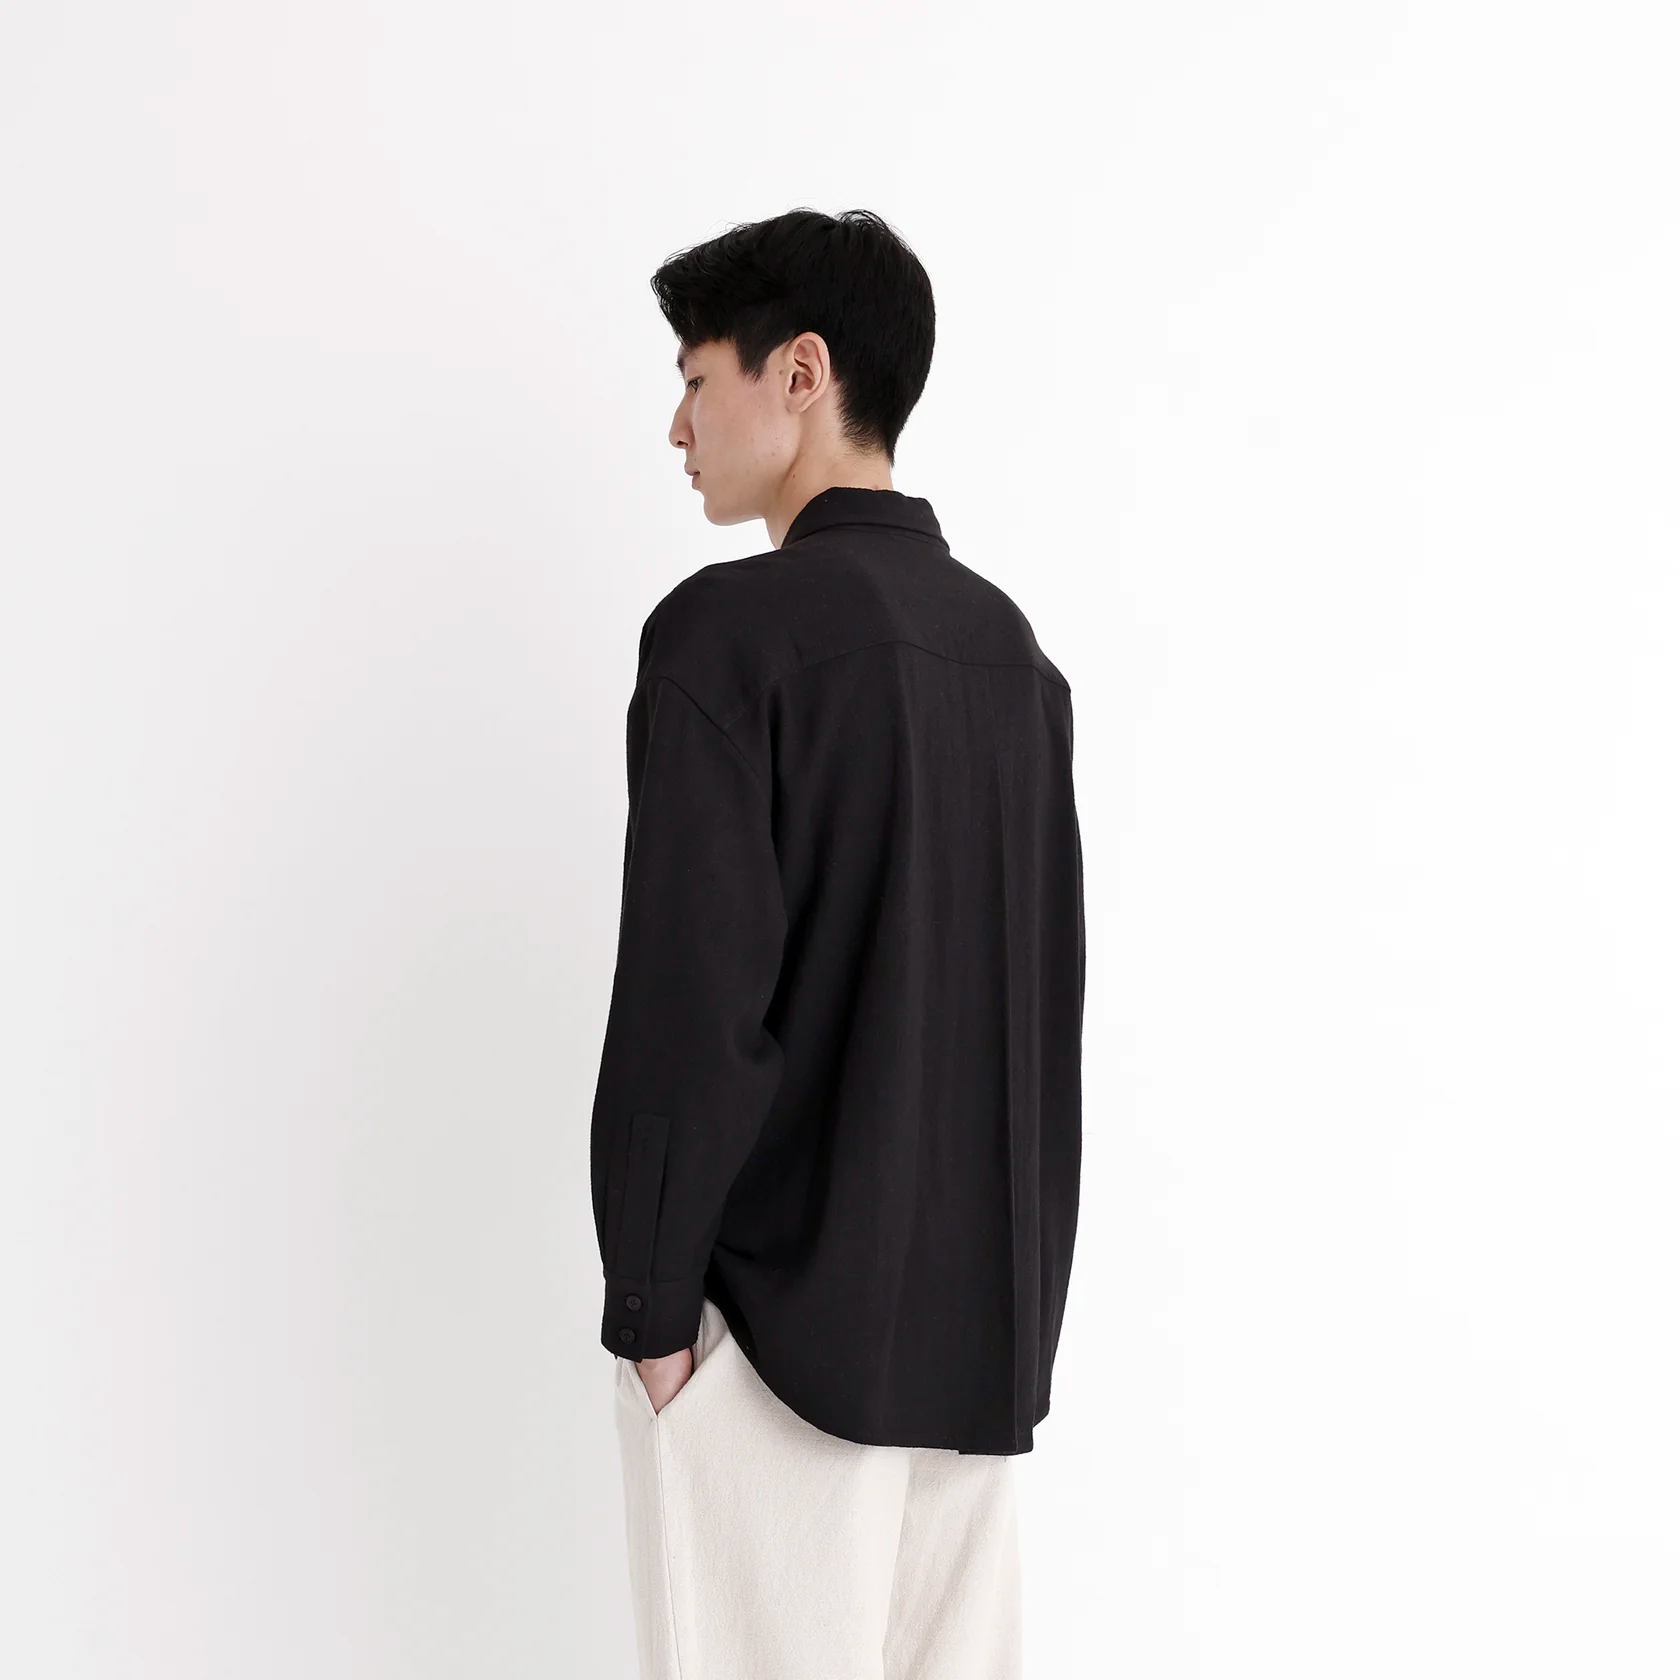 Product Image for Dolman Shirt, Black